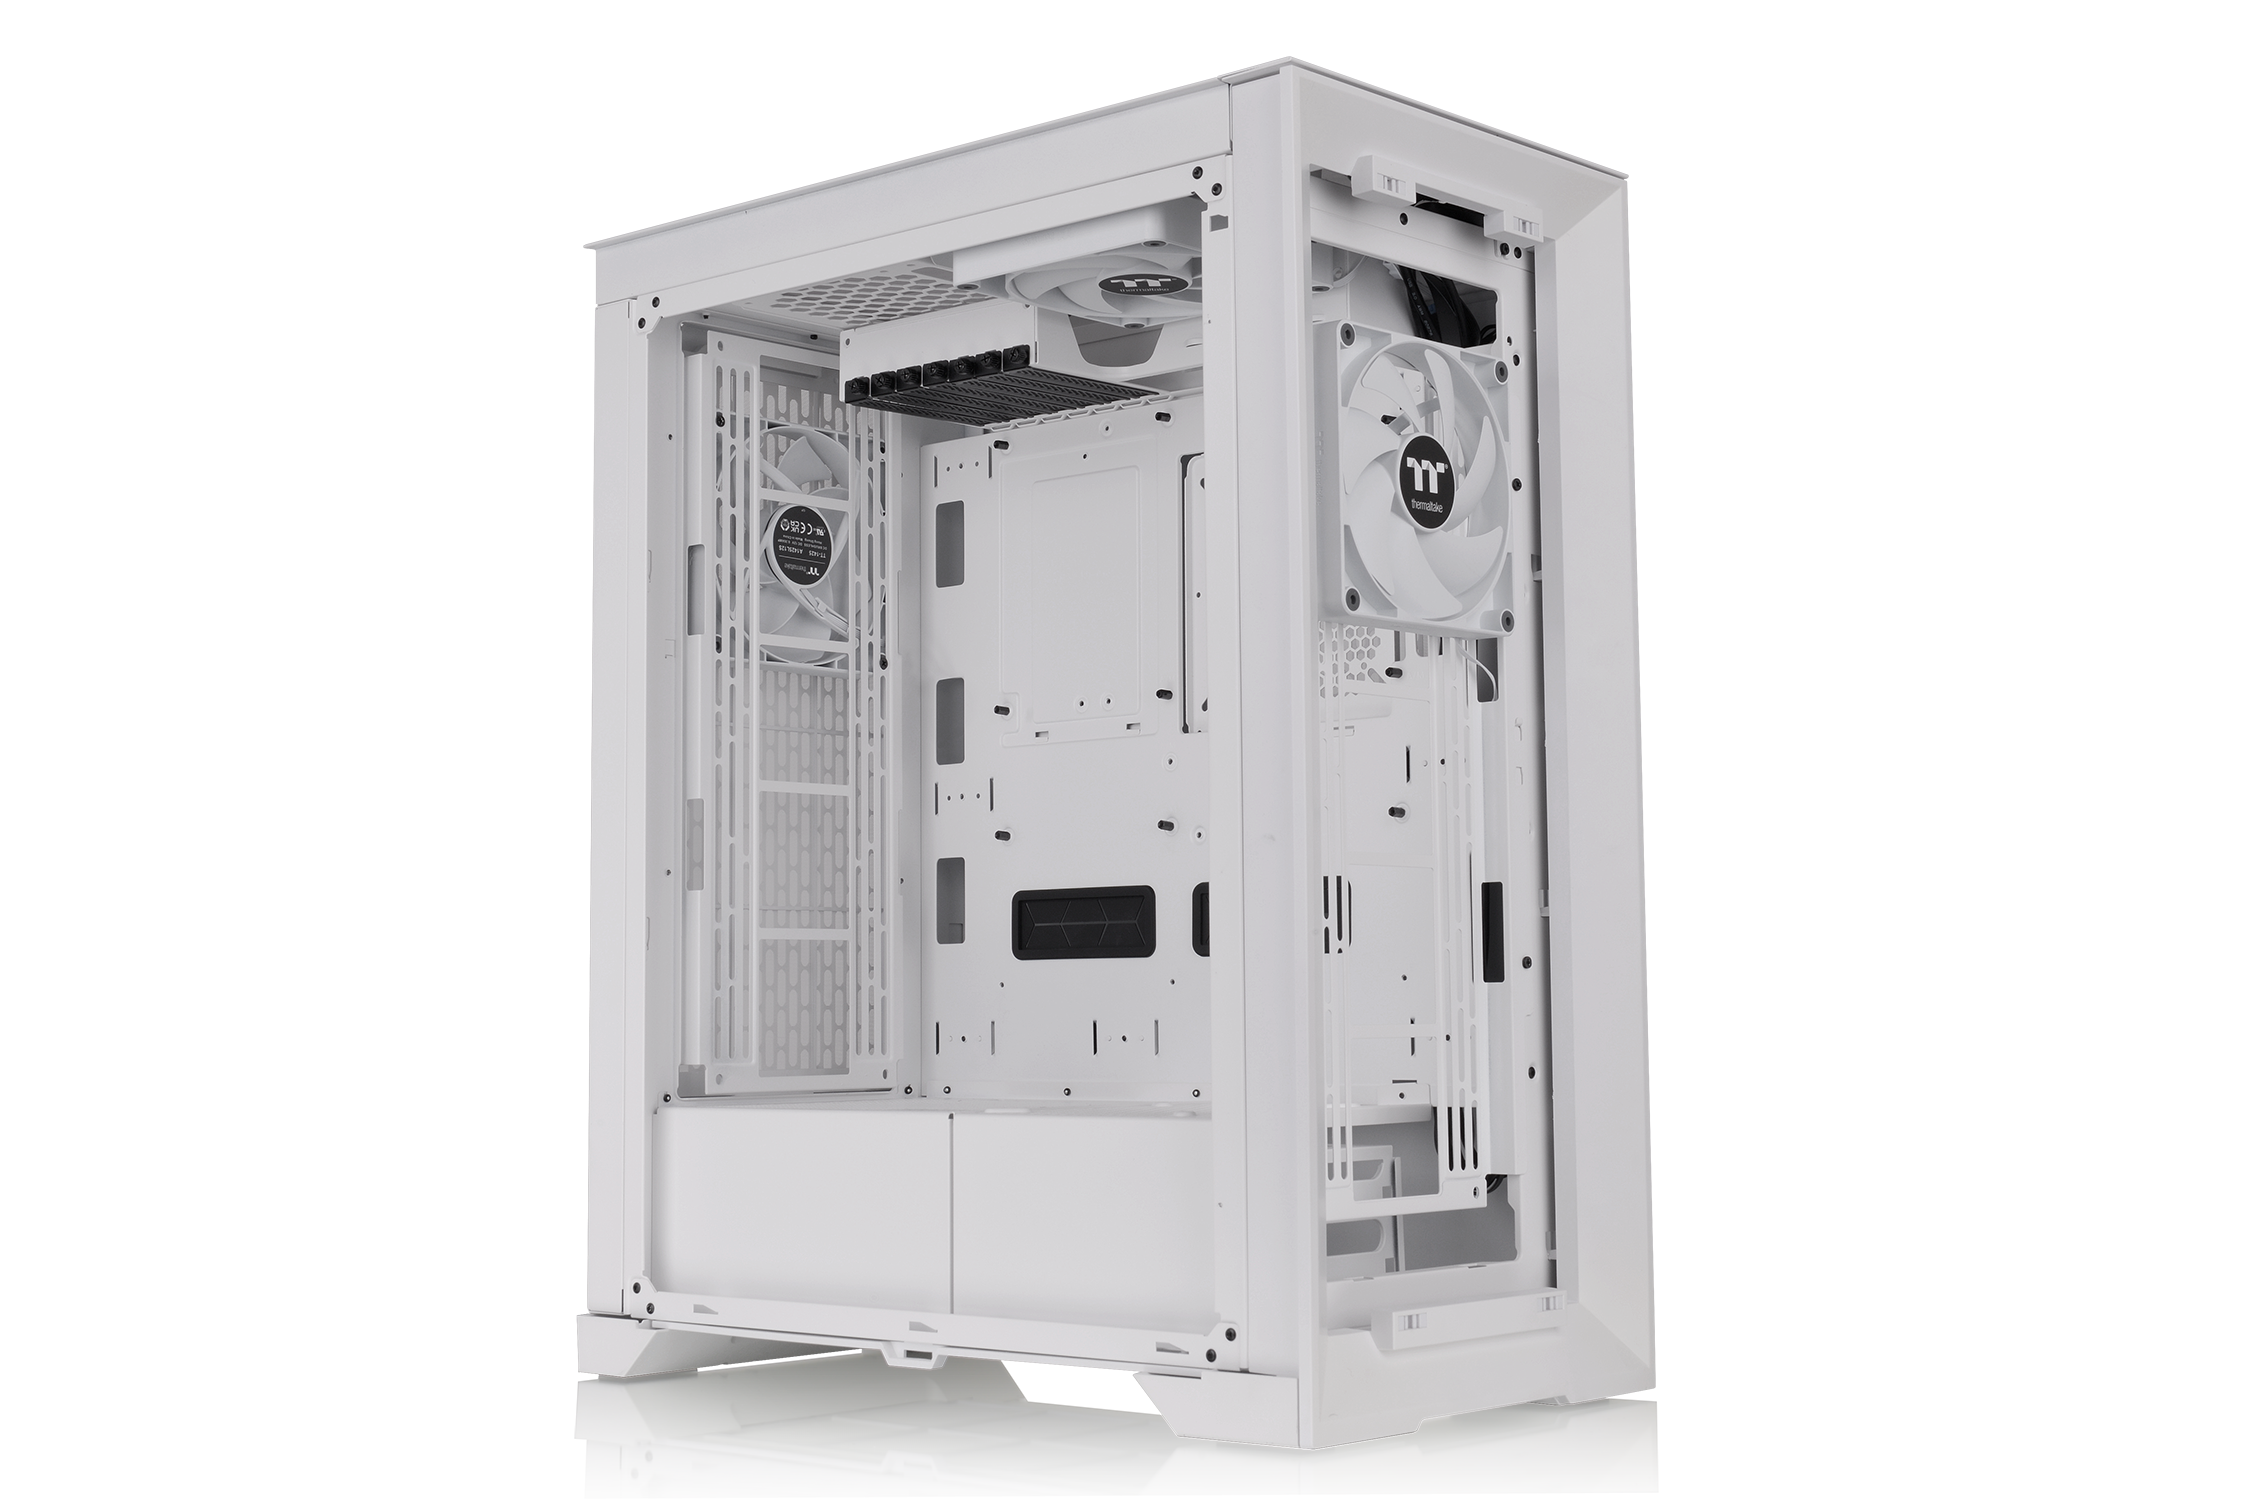 ThermalTake - Thermaltake CTE T500 Air Snow Full Tower Case - White